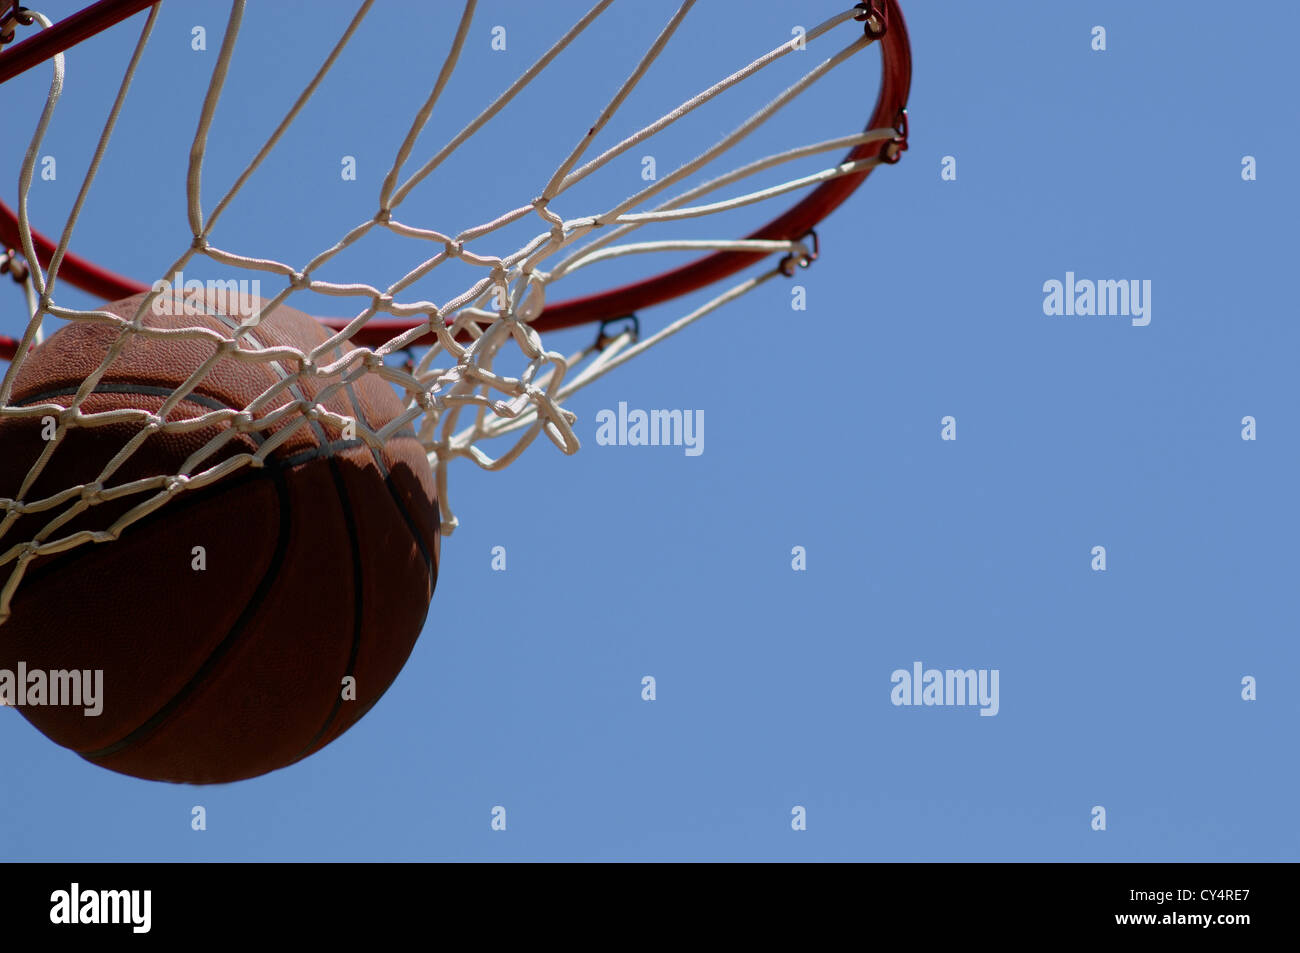 Basketball going through net against blue sky Stock Photo